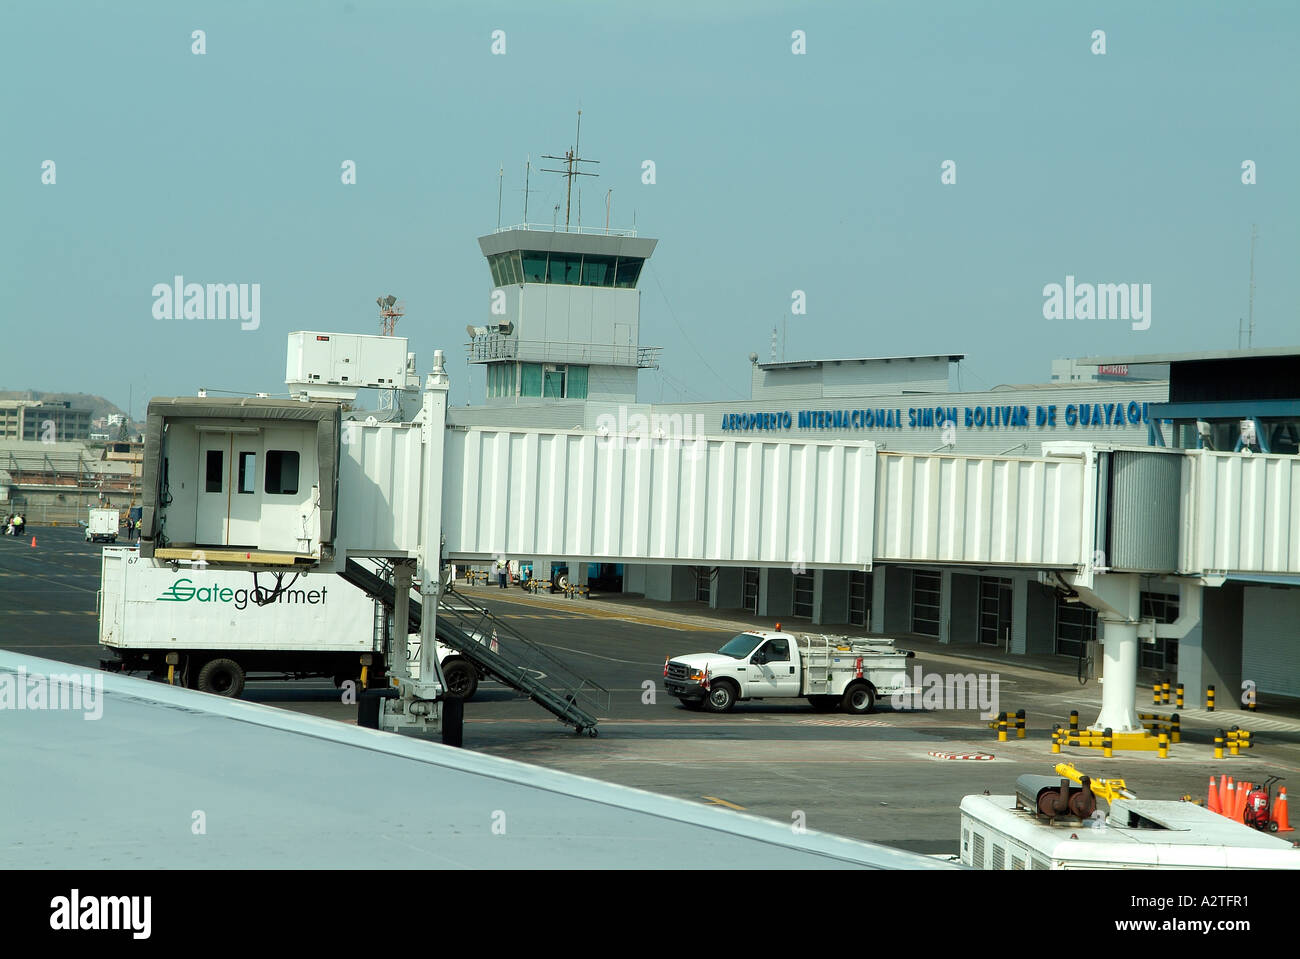 International airport Simon Bolivar, Guayaquil, Ecuador. Stock Photo